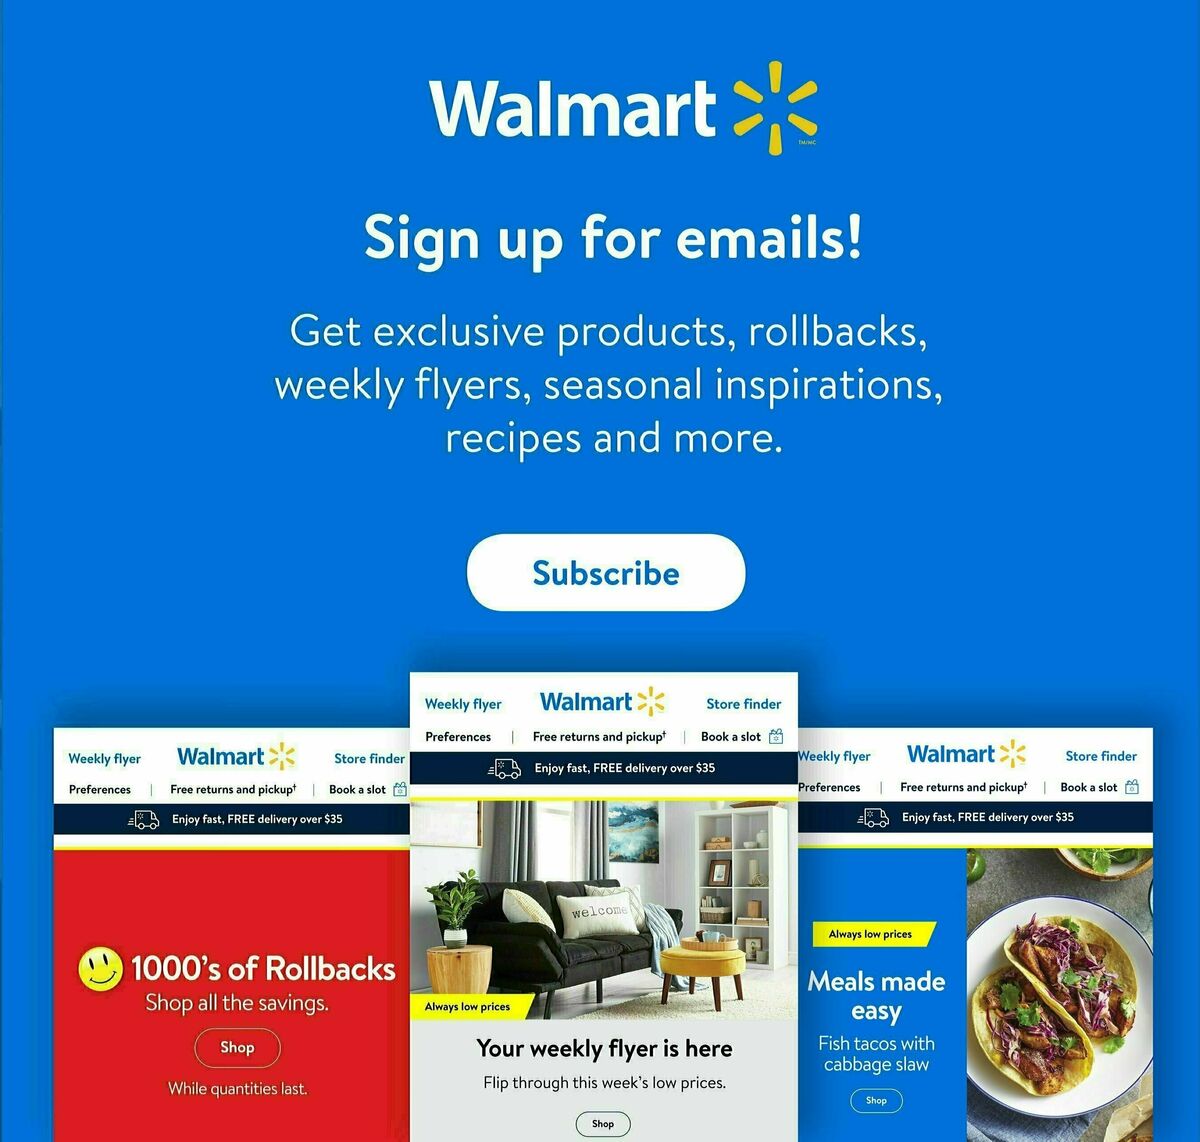 Walmart Celebrate Fall Flyer from September 21